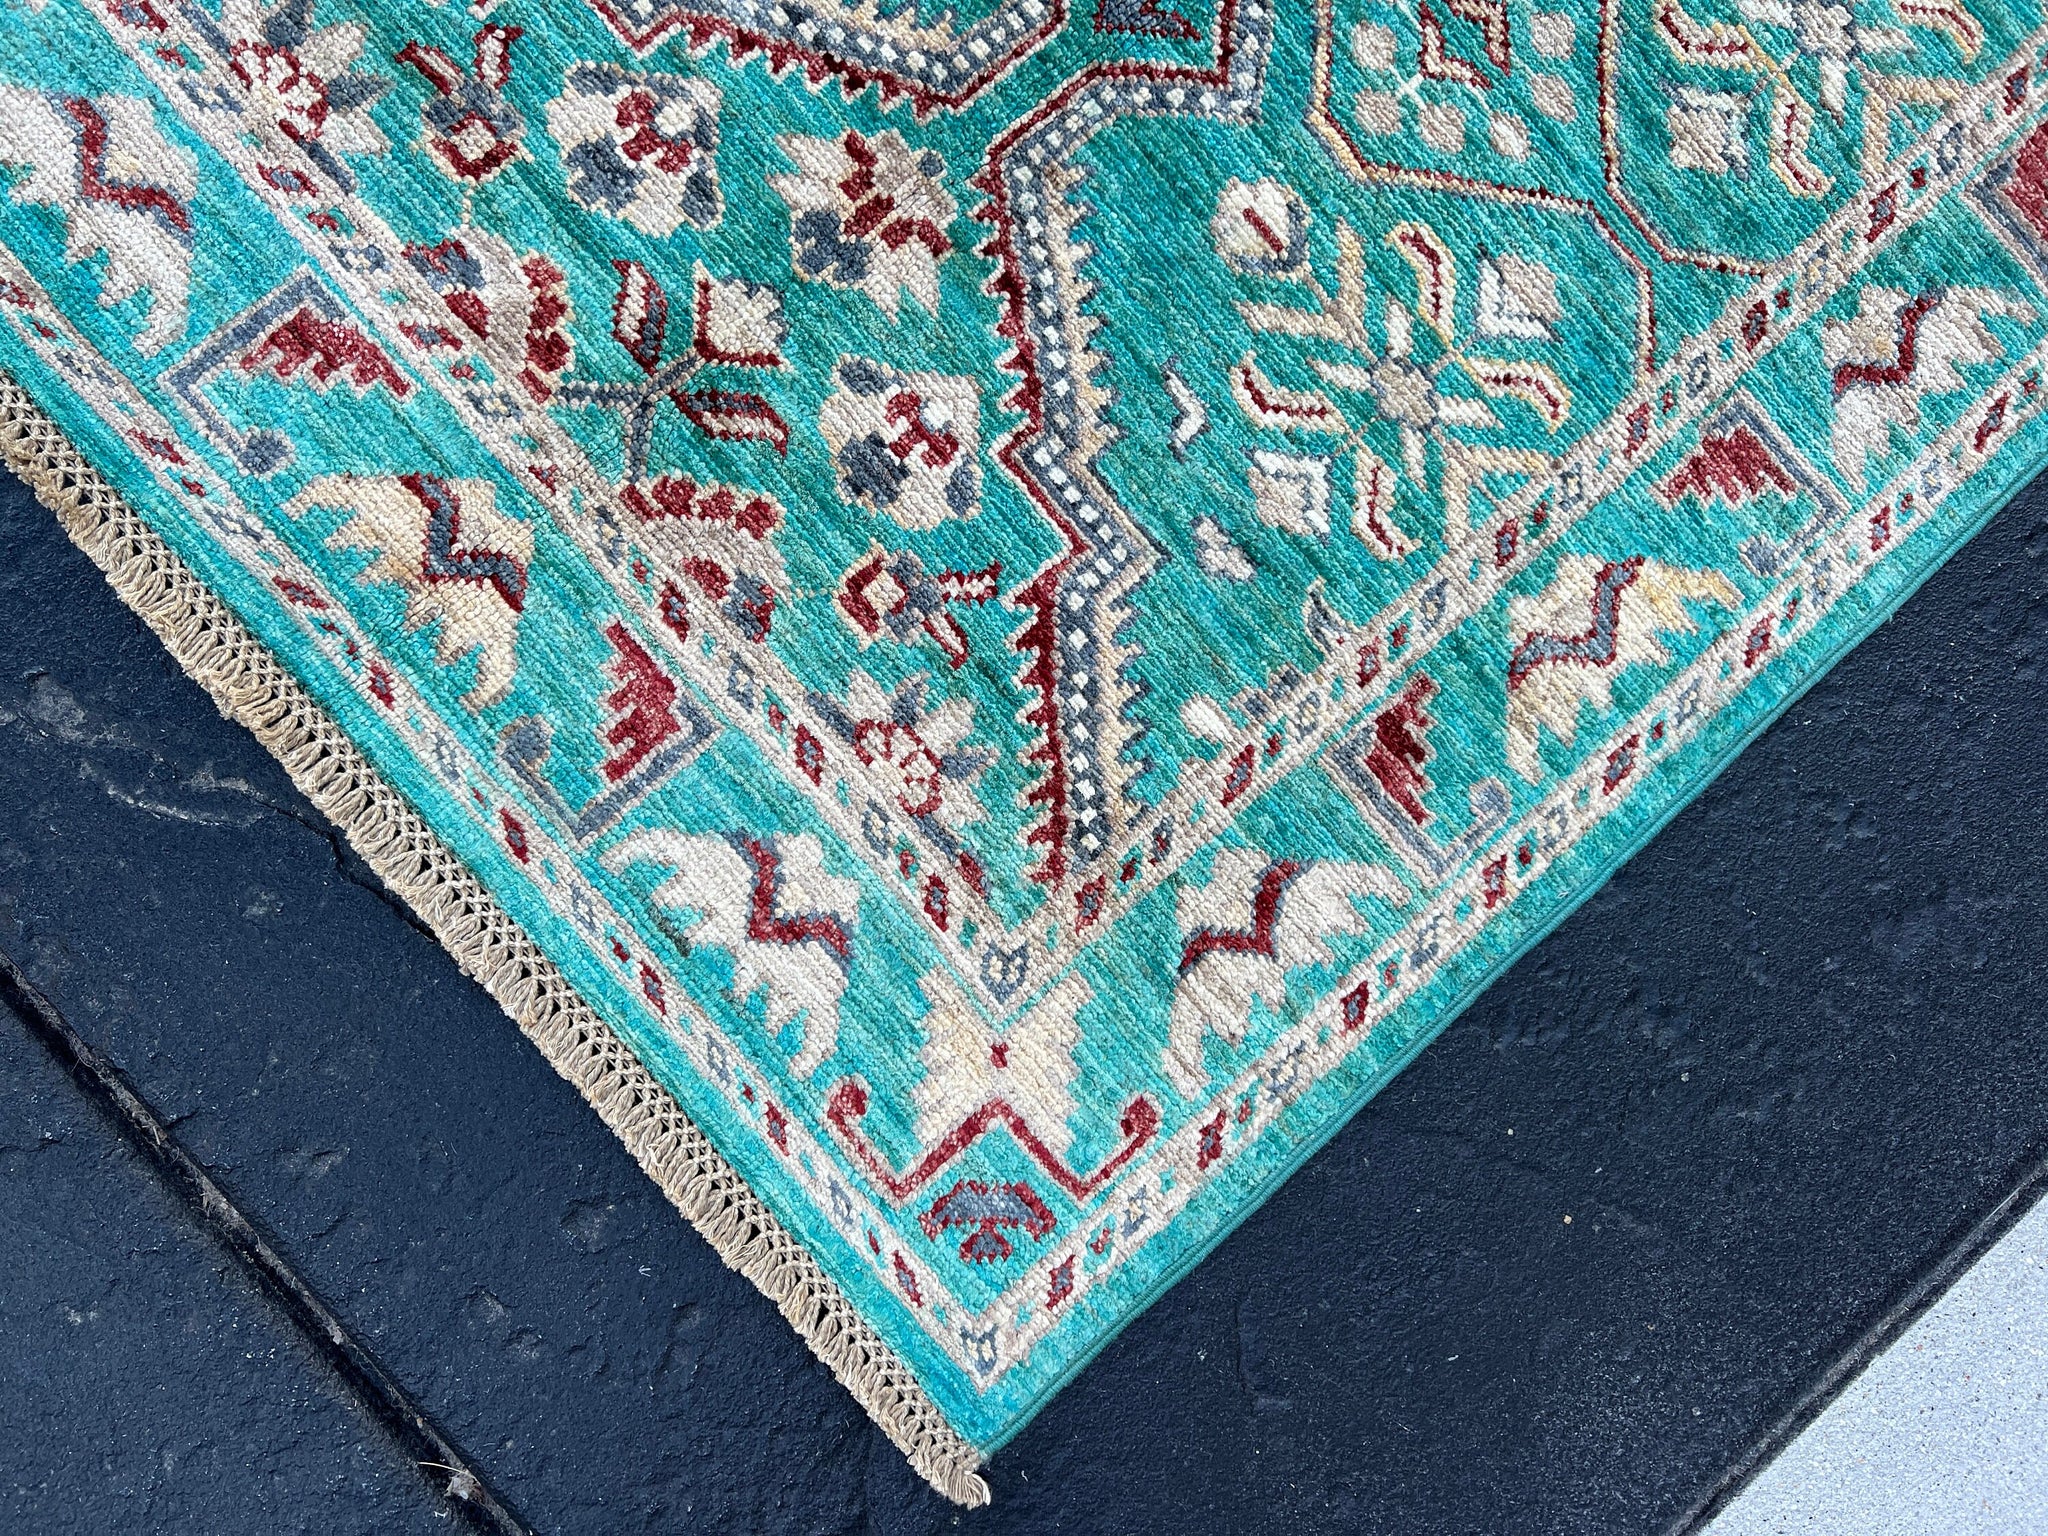 3x10 (90x275) Handmade Afghan Runner Rug | Turquoise Red Cream Beige Charcoal Grey | Hand Knotted Wool Woven Turkish Oushak Tribal Geometric